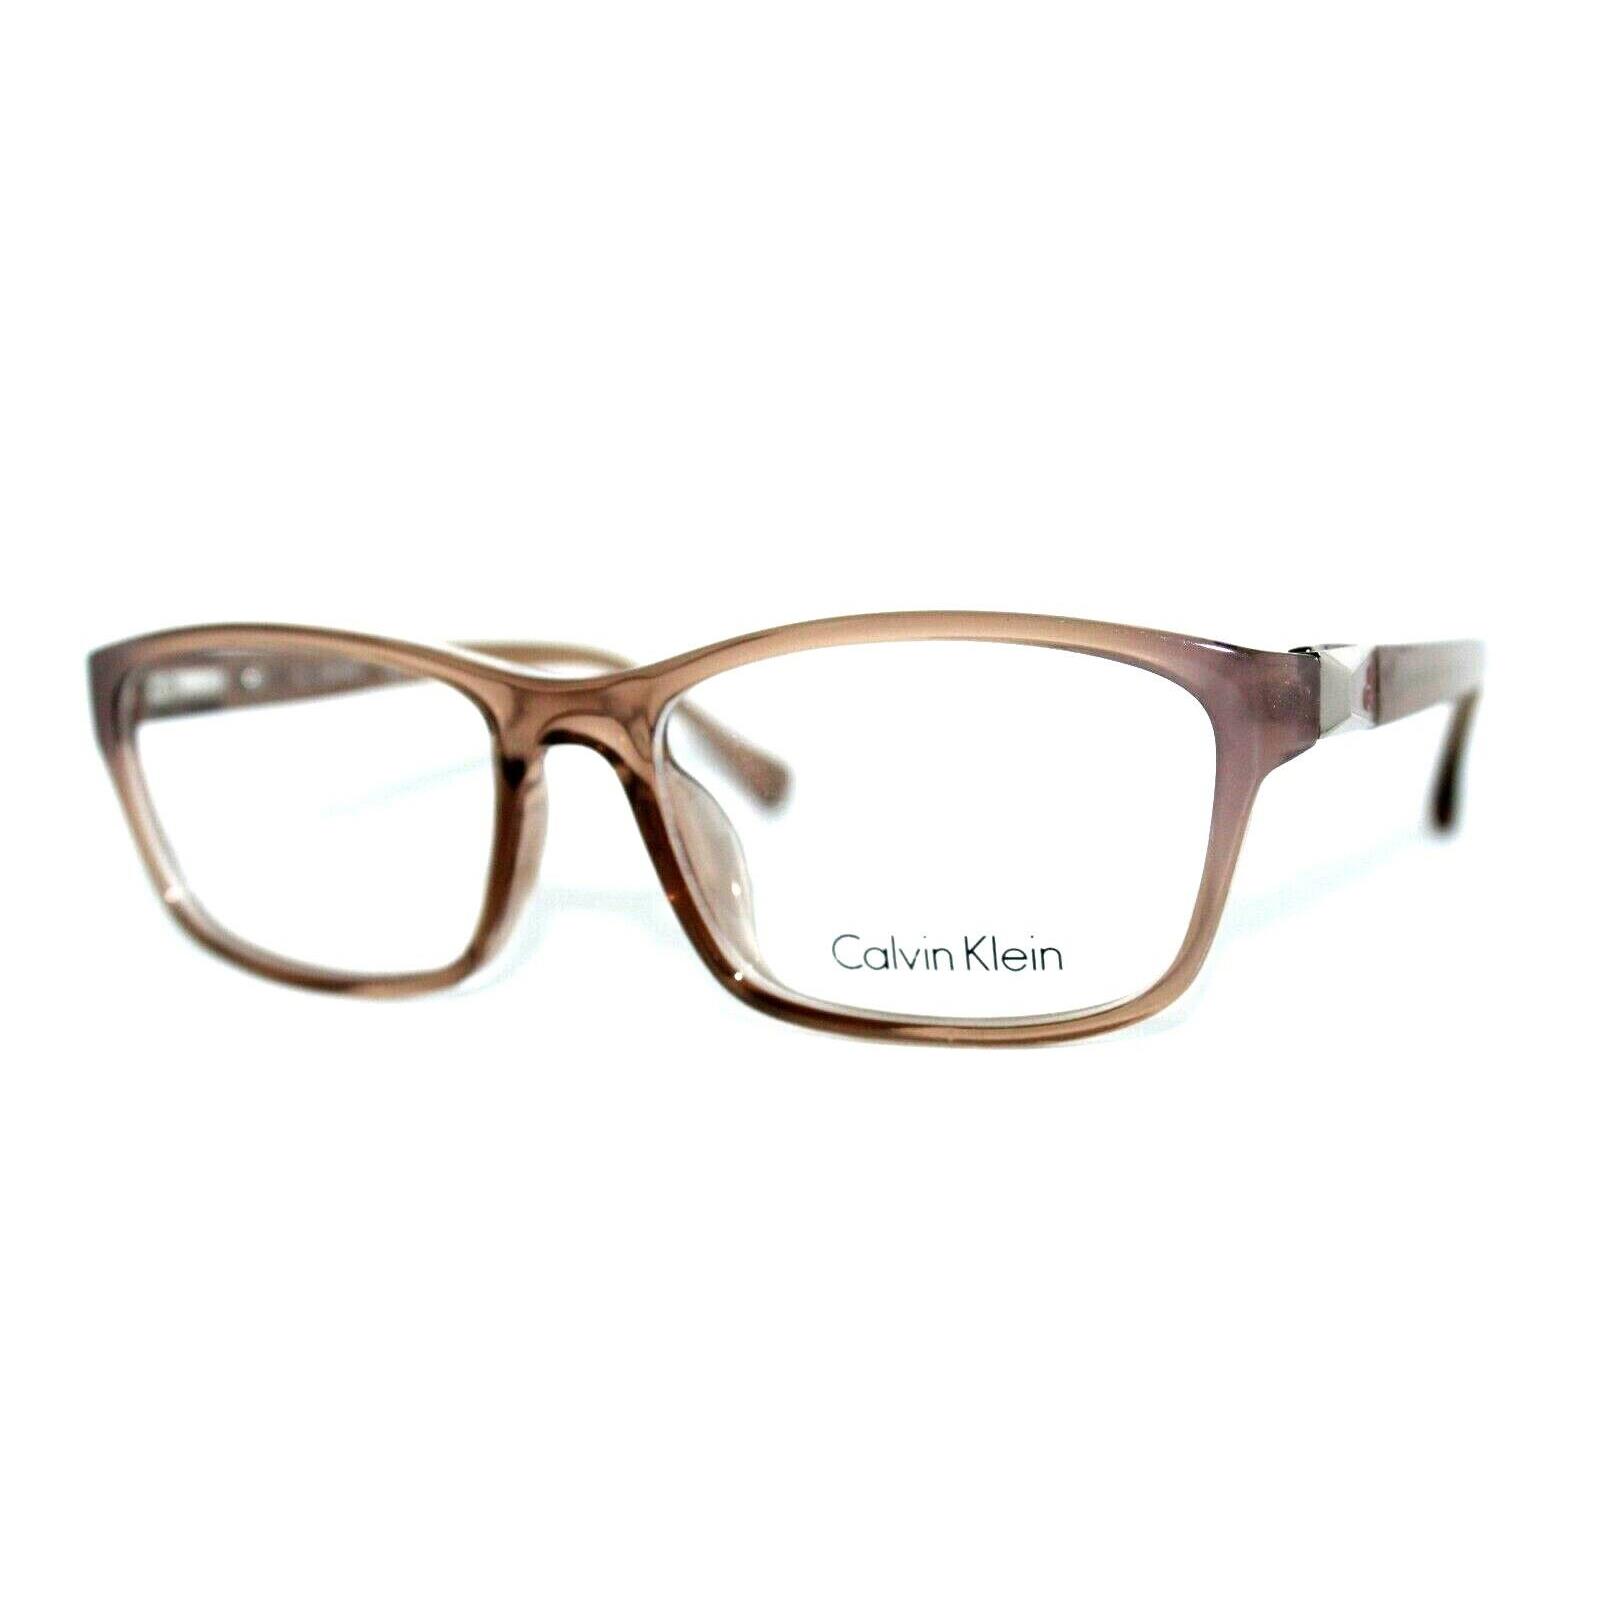 Calvin Klein CK 5861 208 Clear Brown Eyeglasses Frames 53MM RX